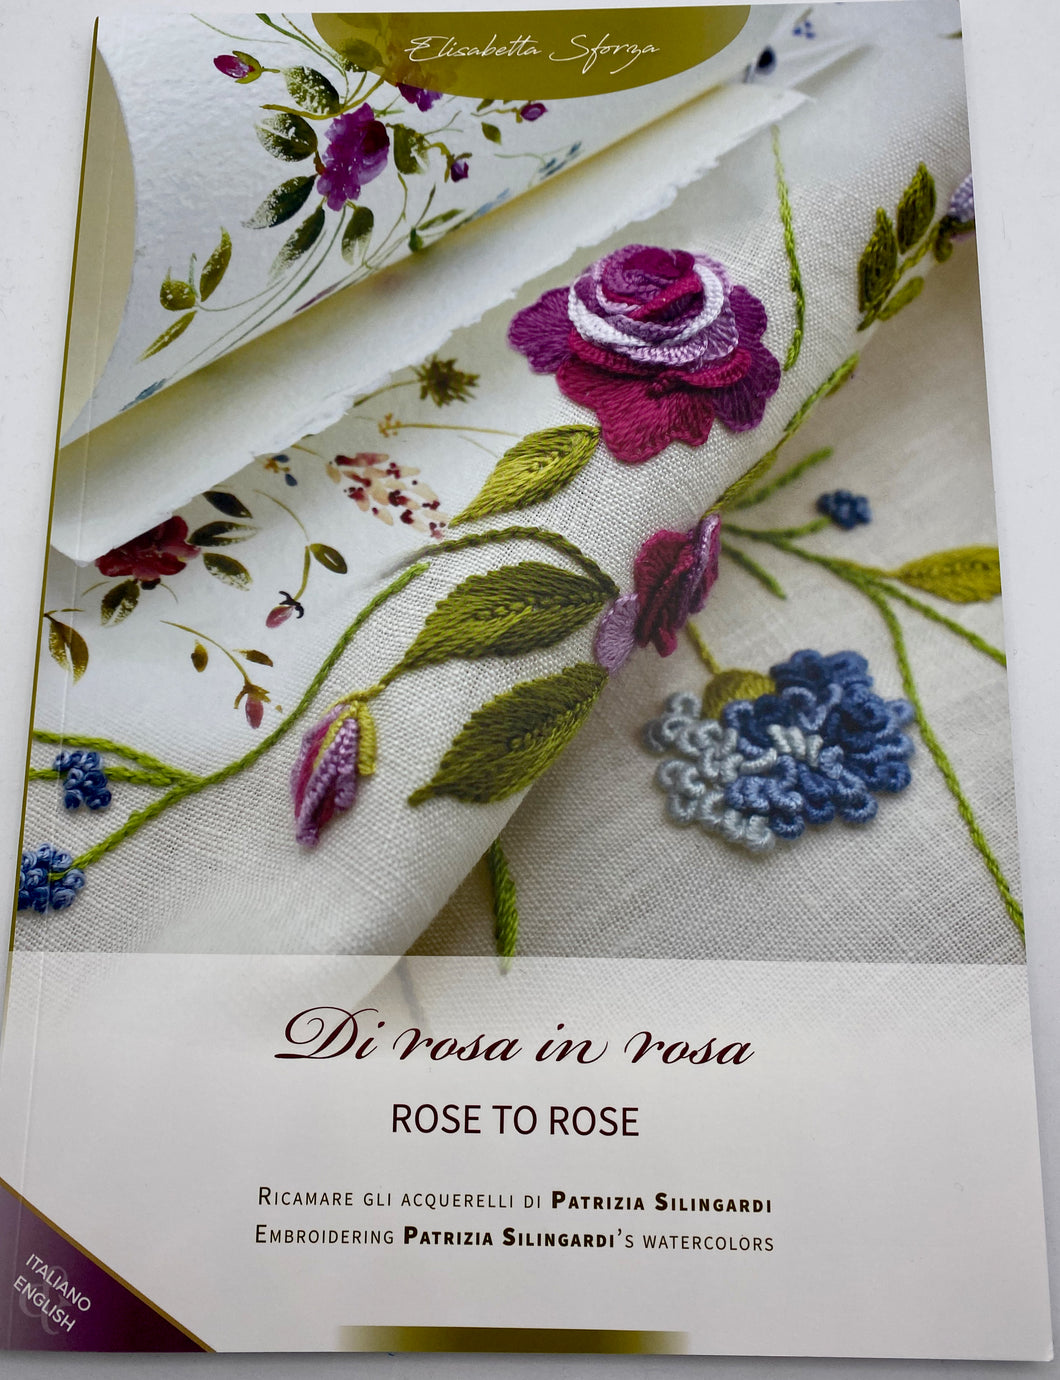 Rose to Rose by Elisabetta Sforza